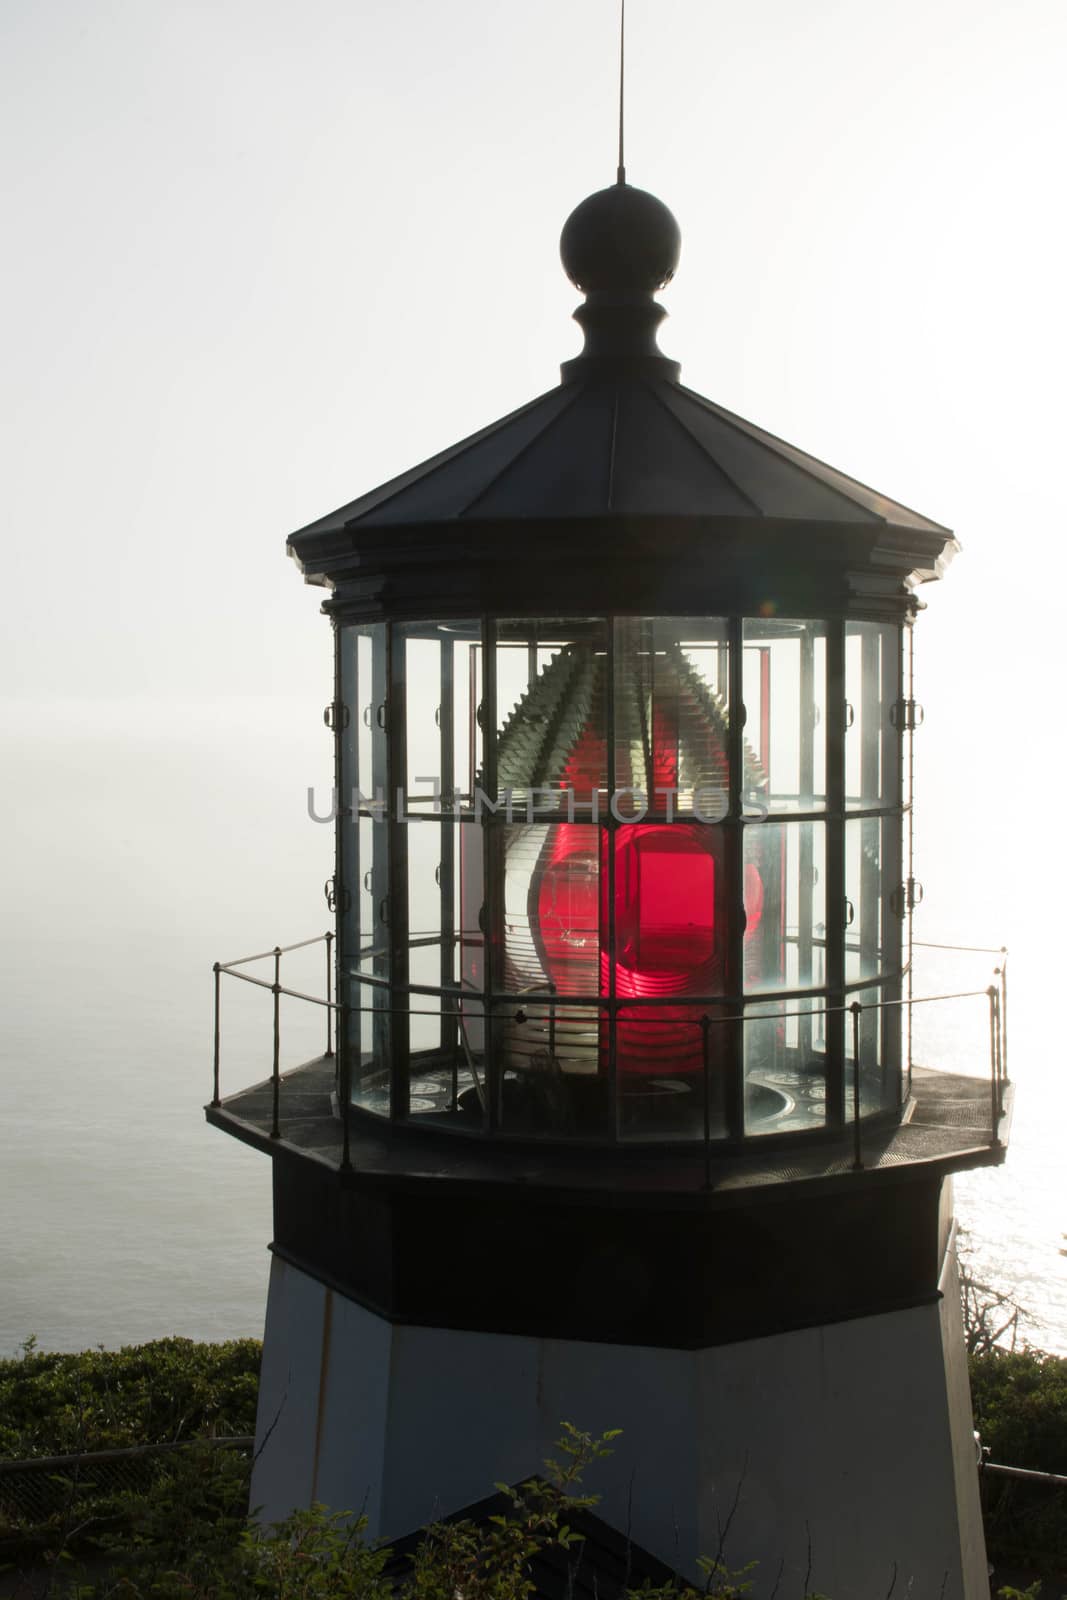 Cape Meares Lighthouse on the Oregon Coast by cestes001